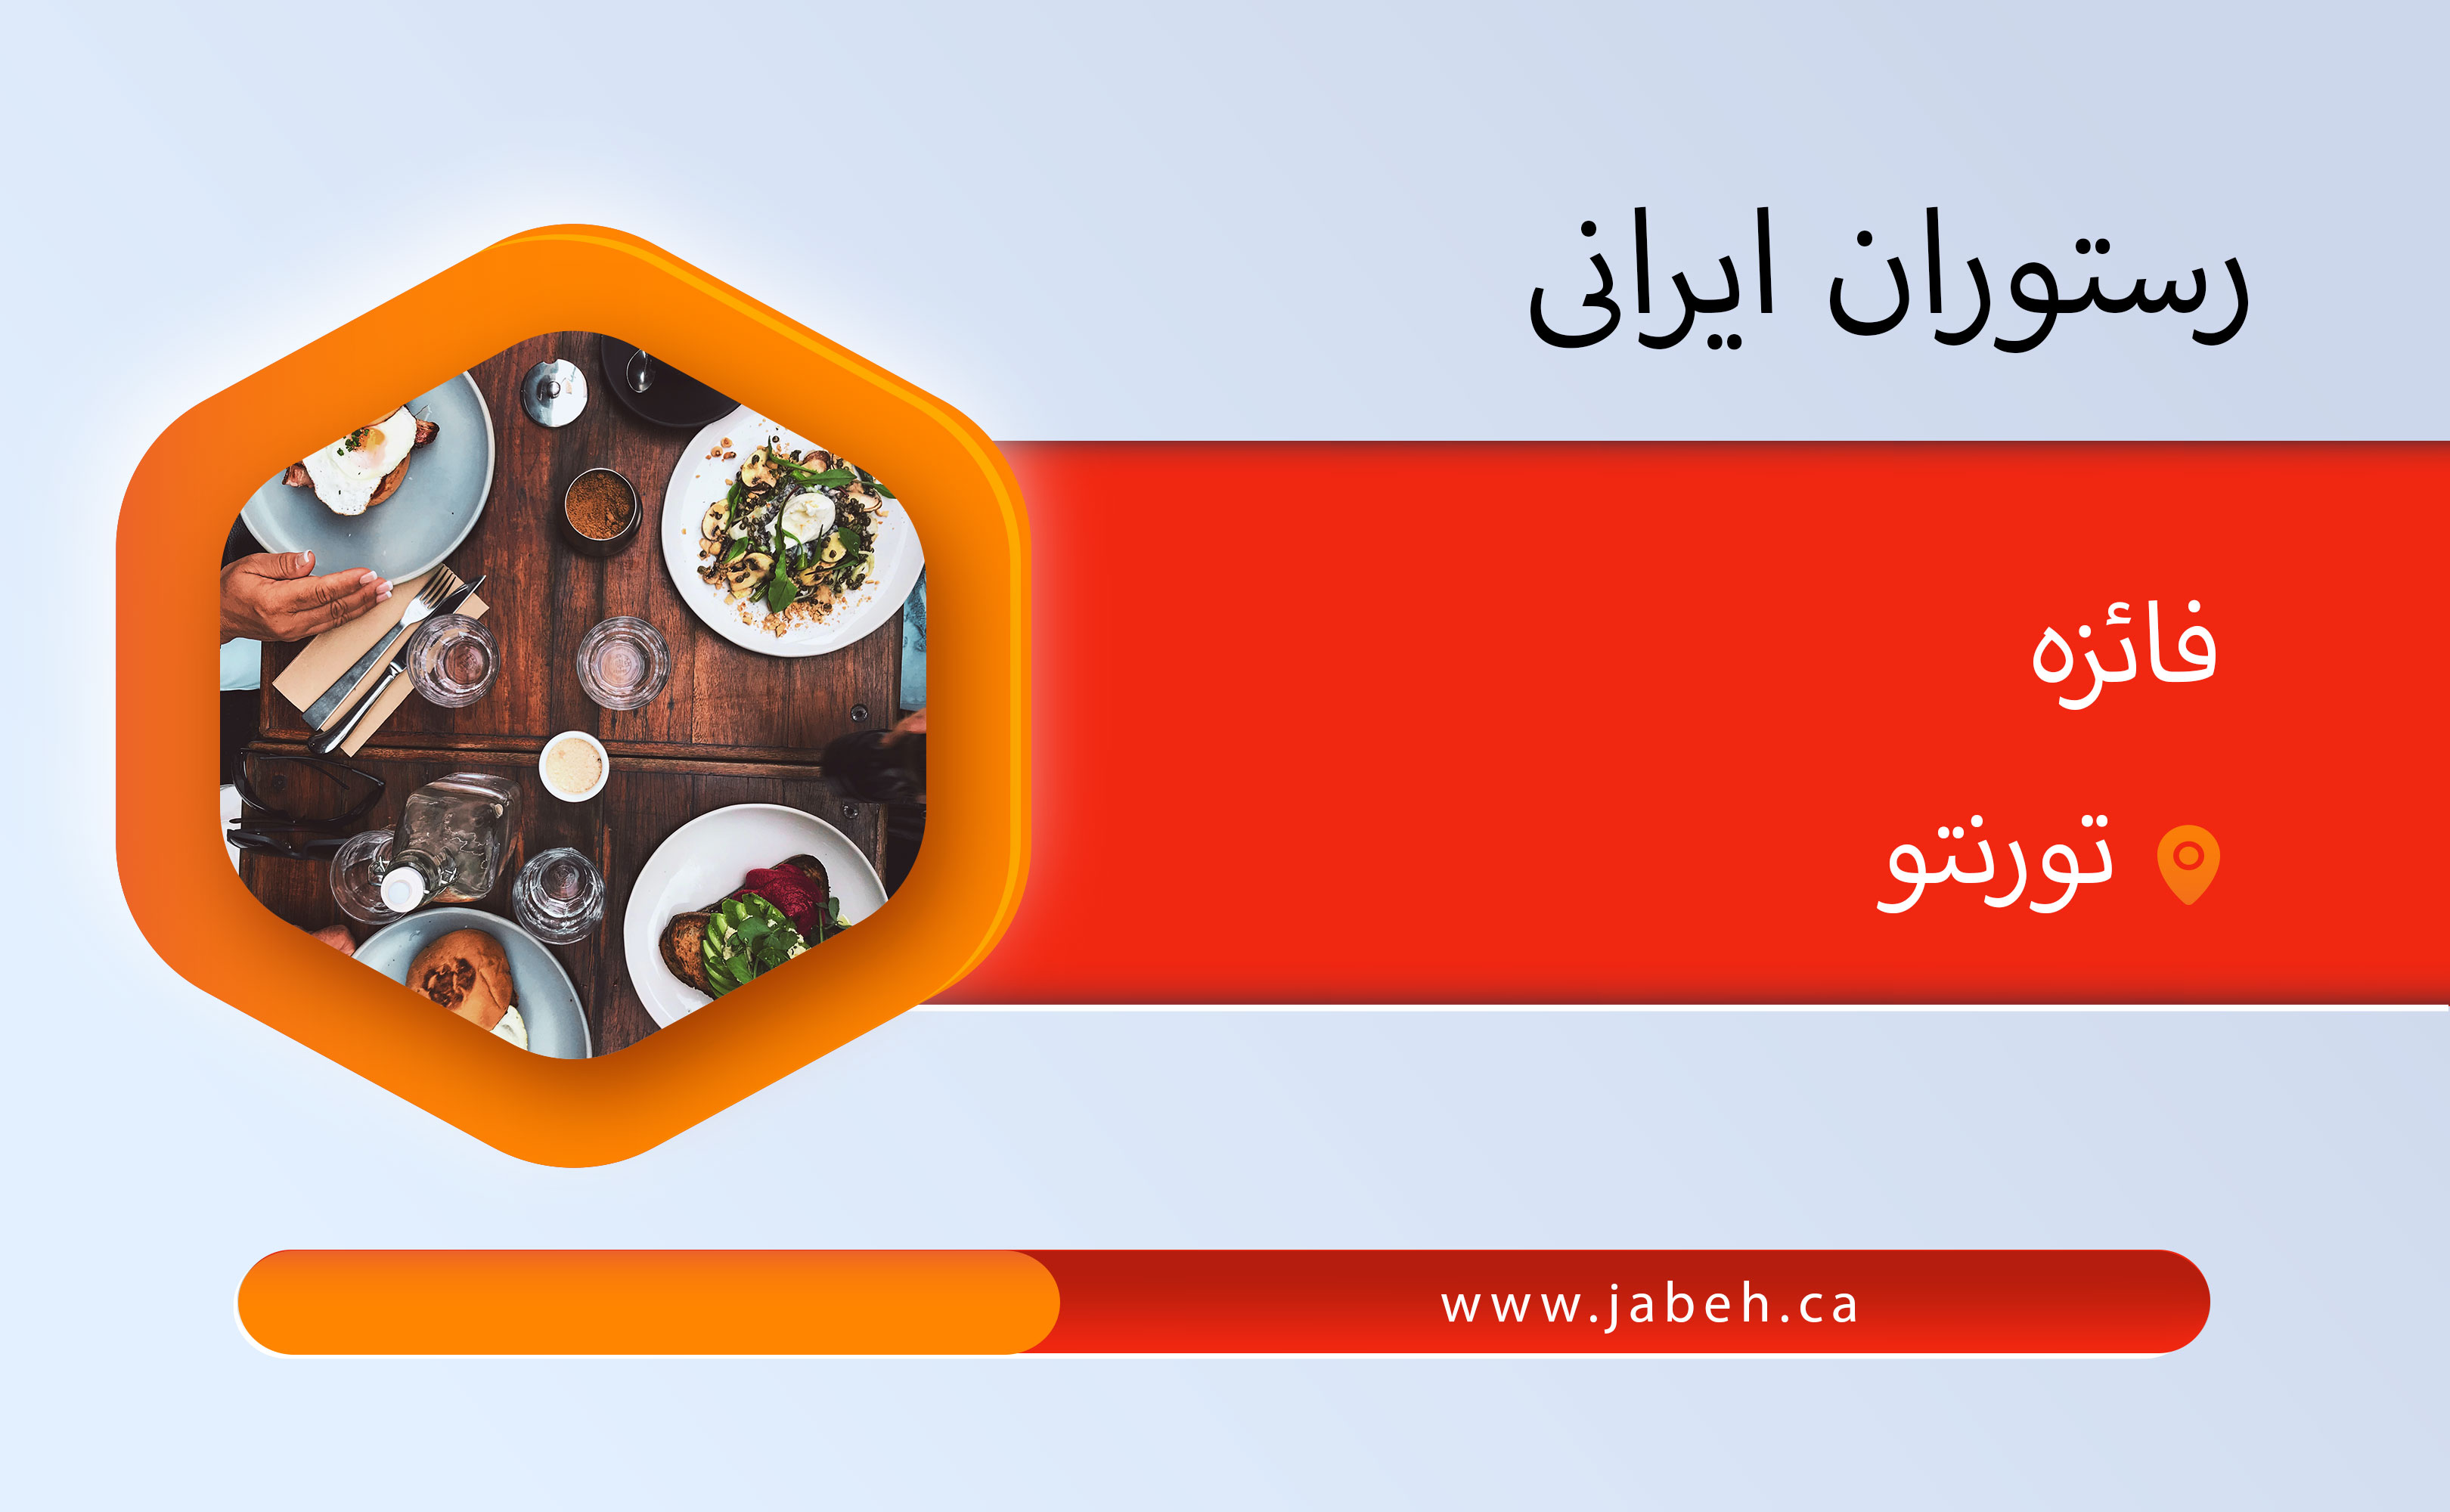 Faezeh Iranian restaurant in Toronto